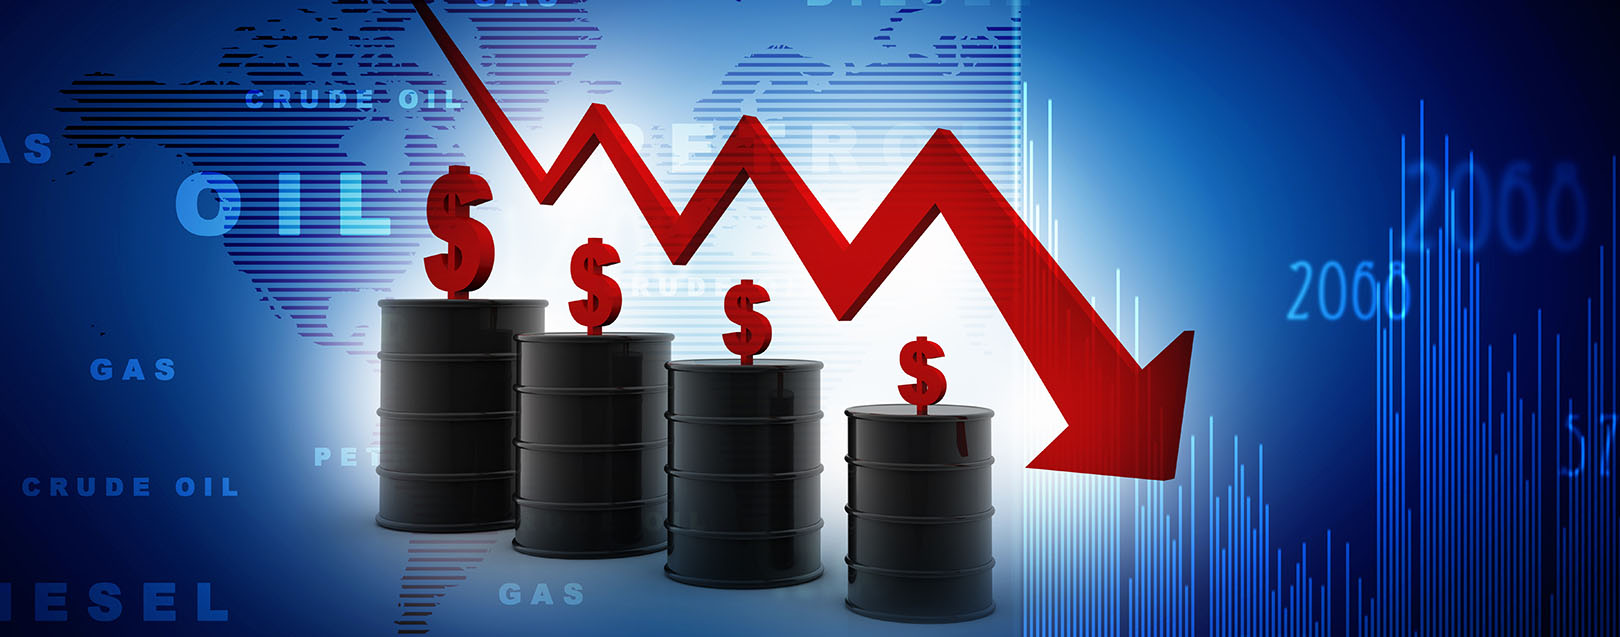 Oil prices dip, talks with Saudi Arabia on output doubtful